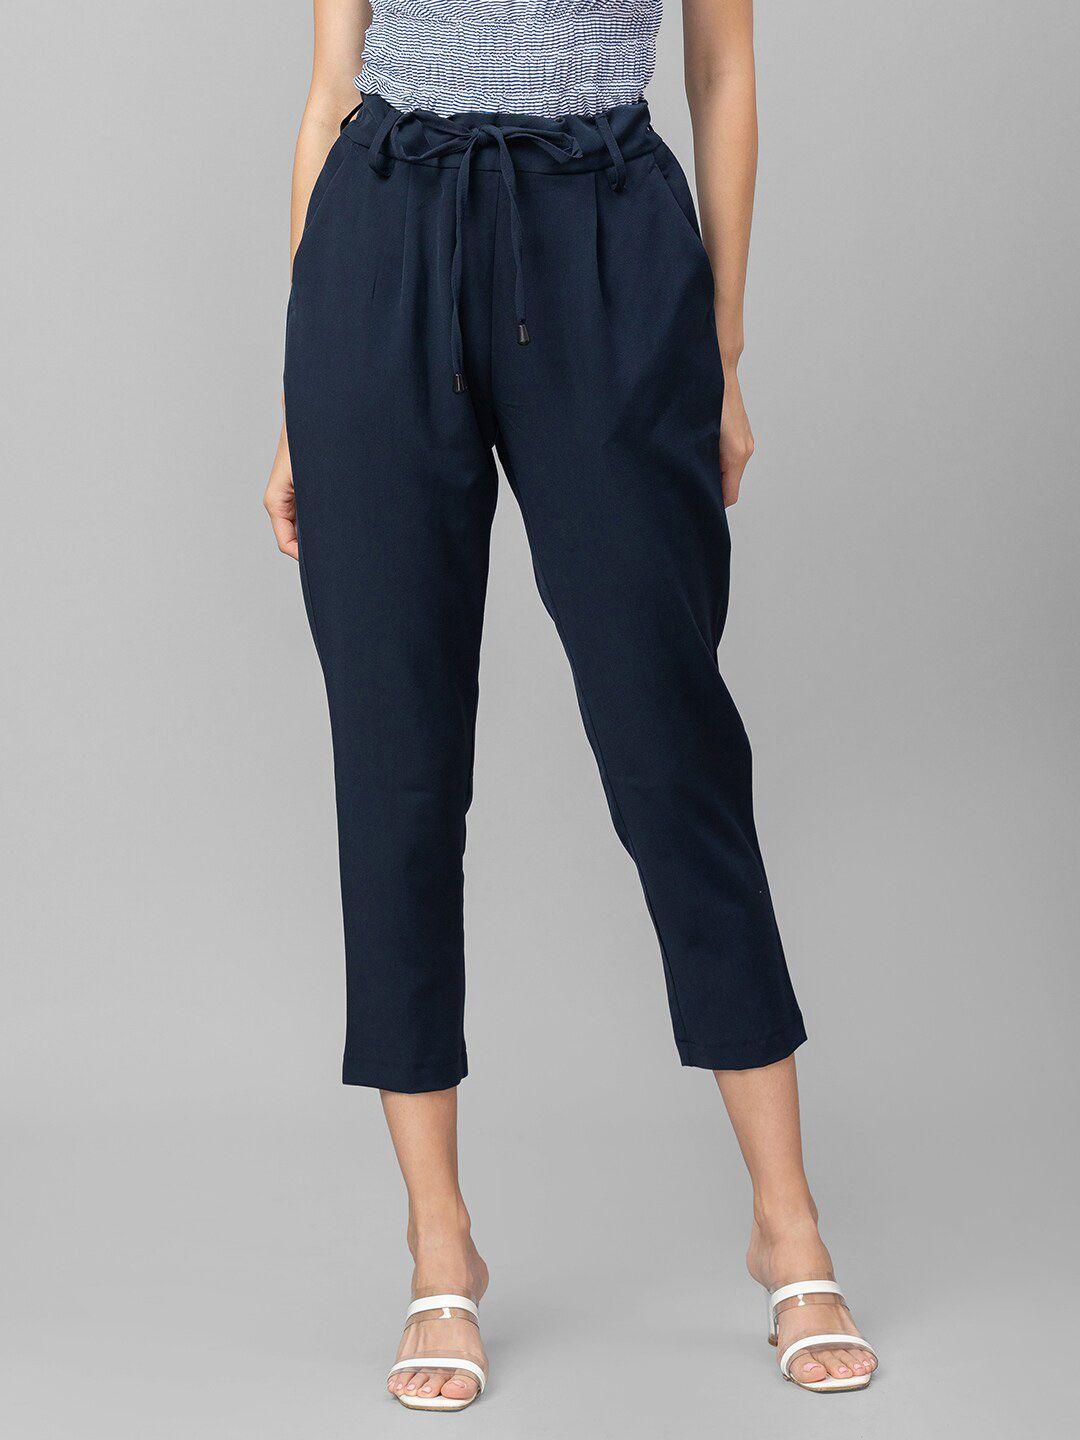 globus-women-navy-blue-pleated-trousers